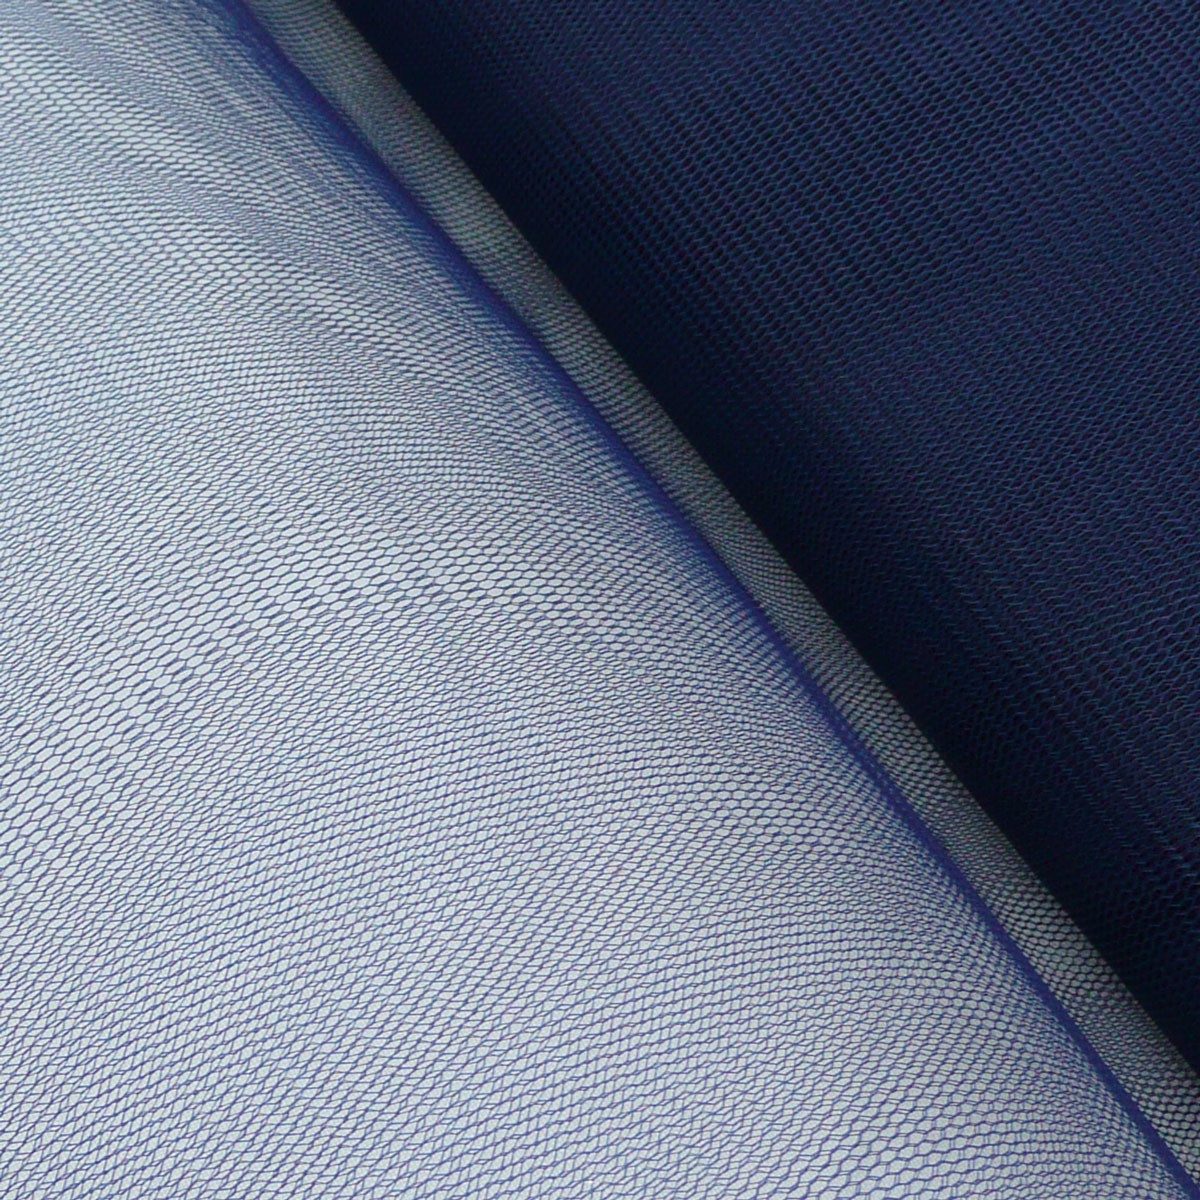 Stoff Kreativstoff Tüll Polyester dunkelblau 1,4m Breite